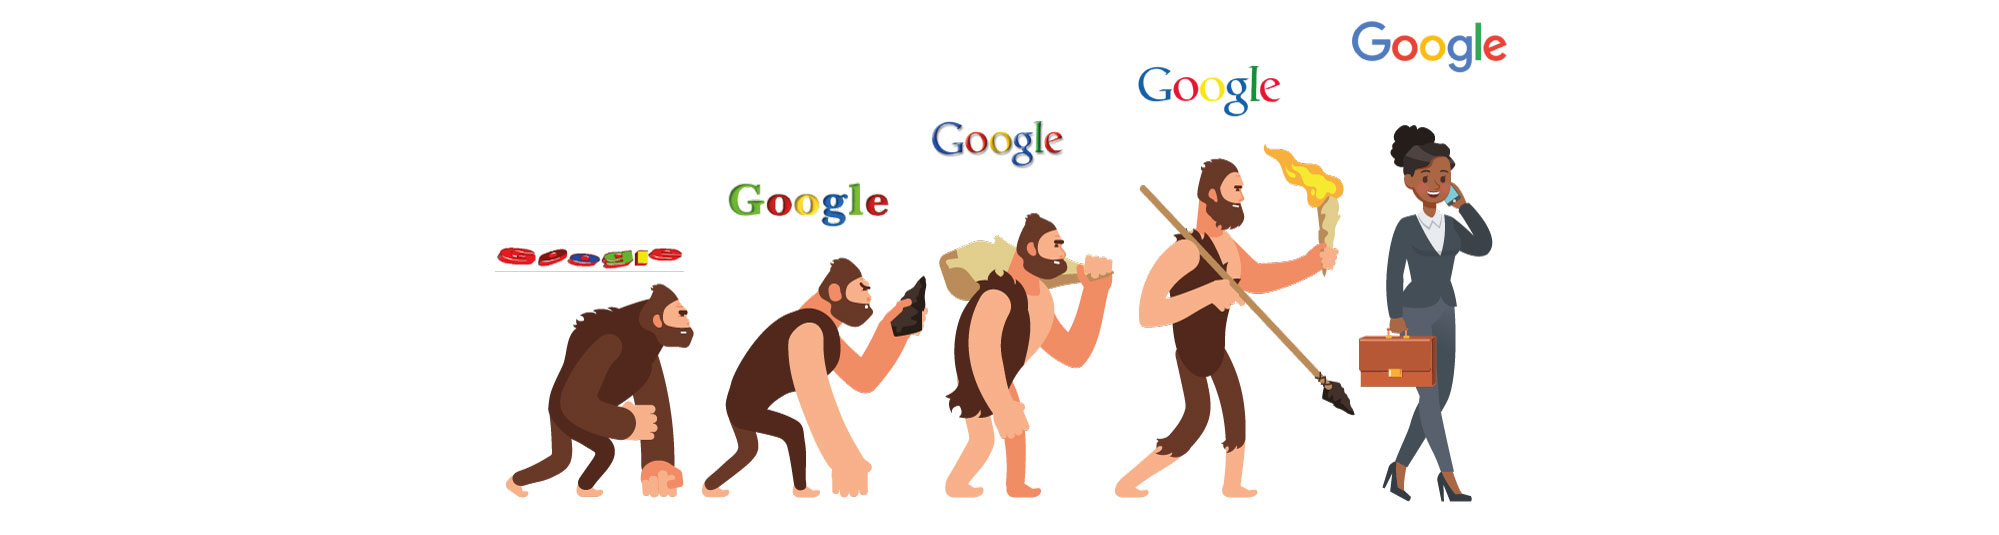 Google evolution concept